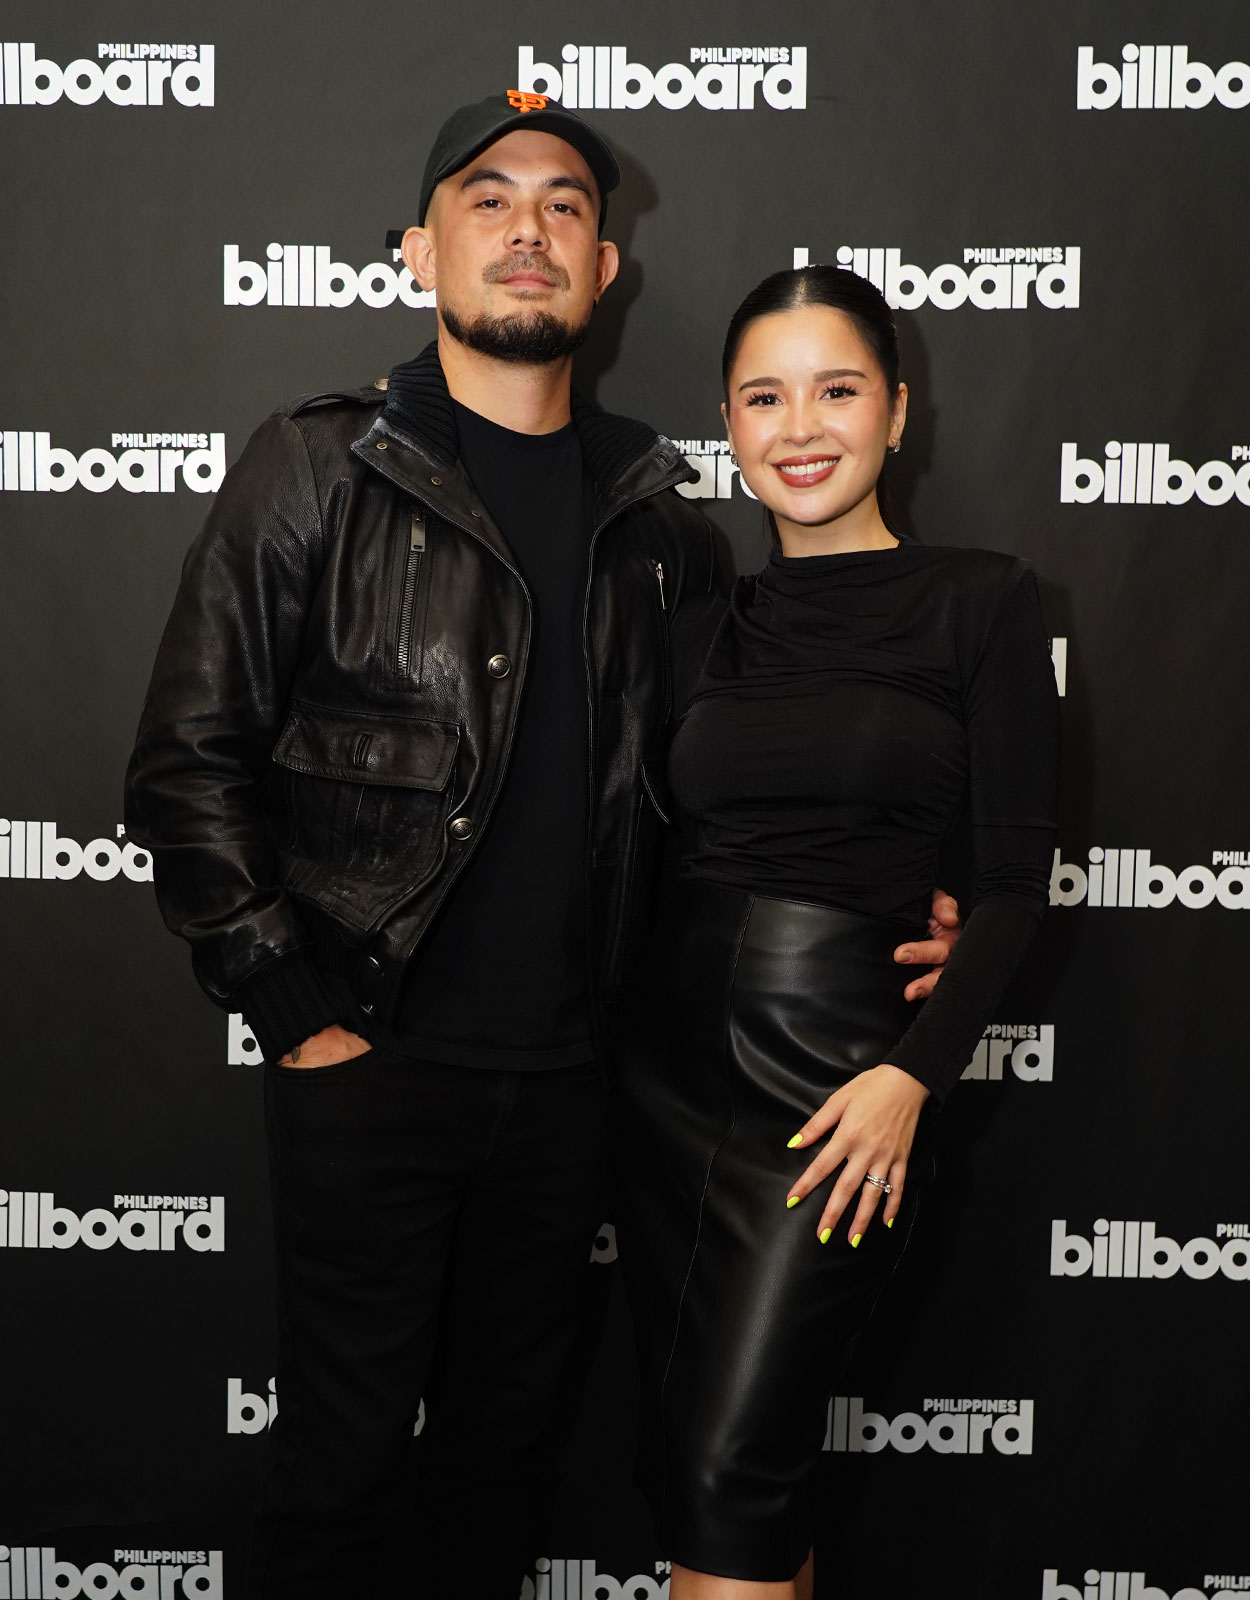 Producer and Founder of Tarsier Records Chris Lopez and his wife Alex Godinez. Photo Credits: KLIQ, Inc.